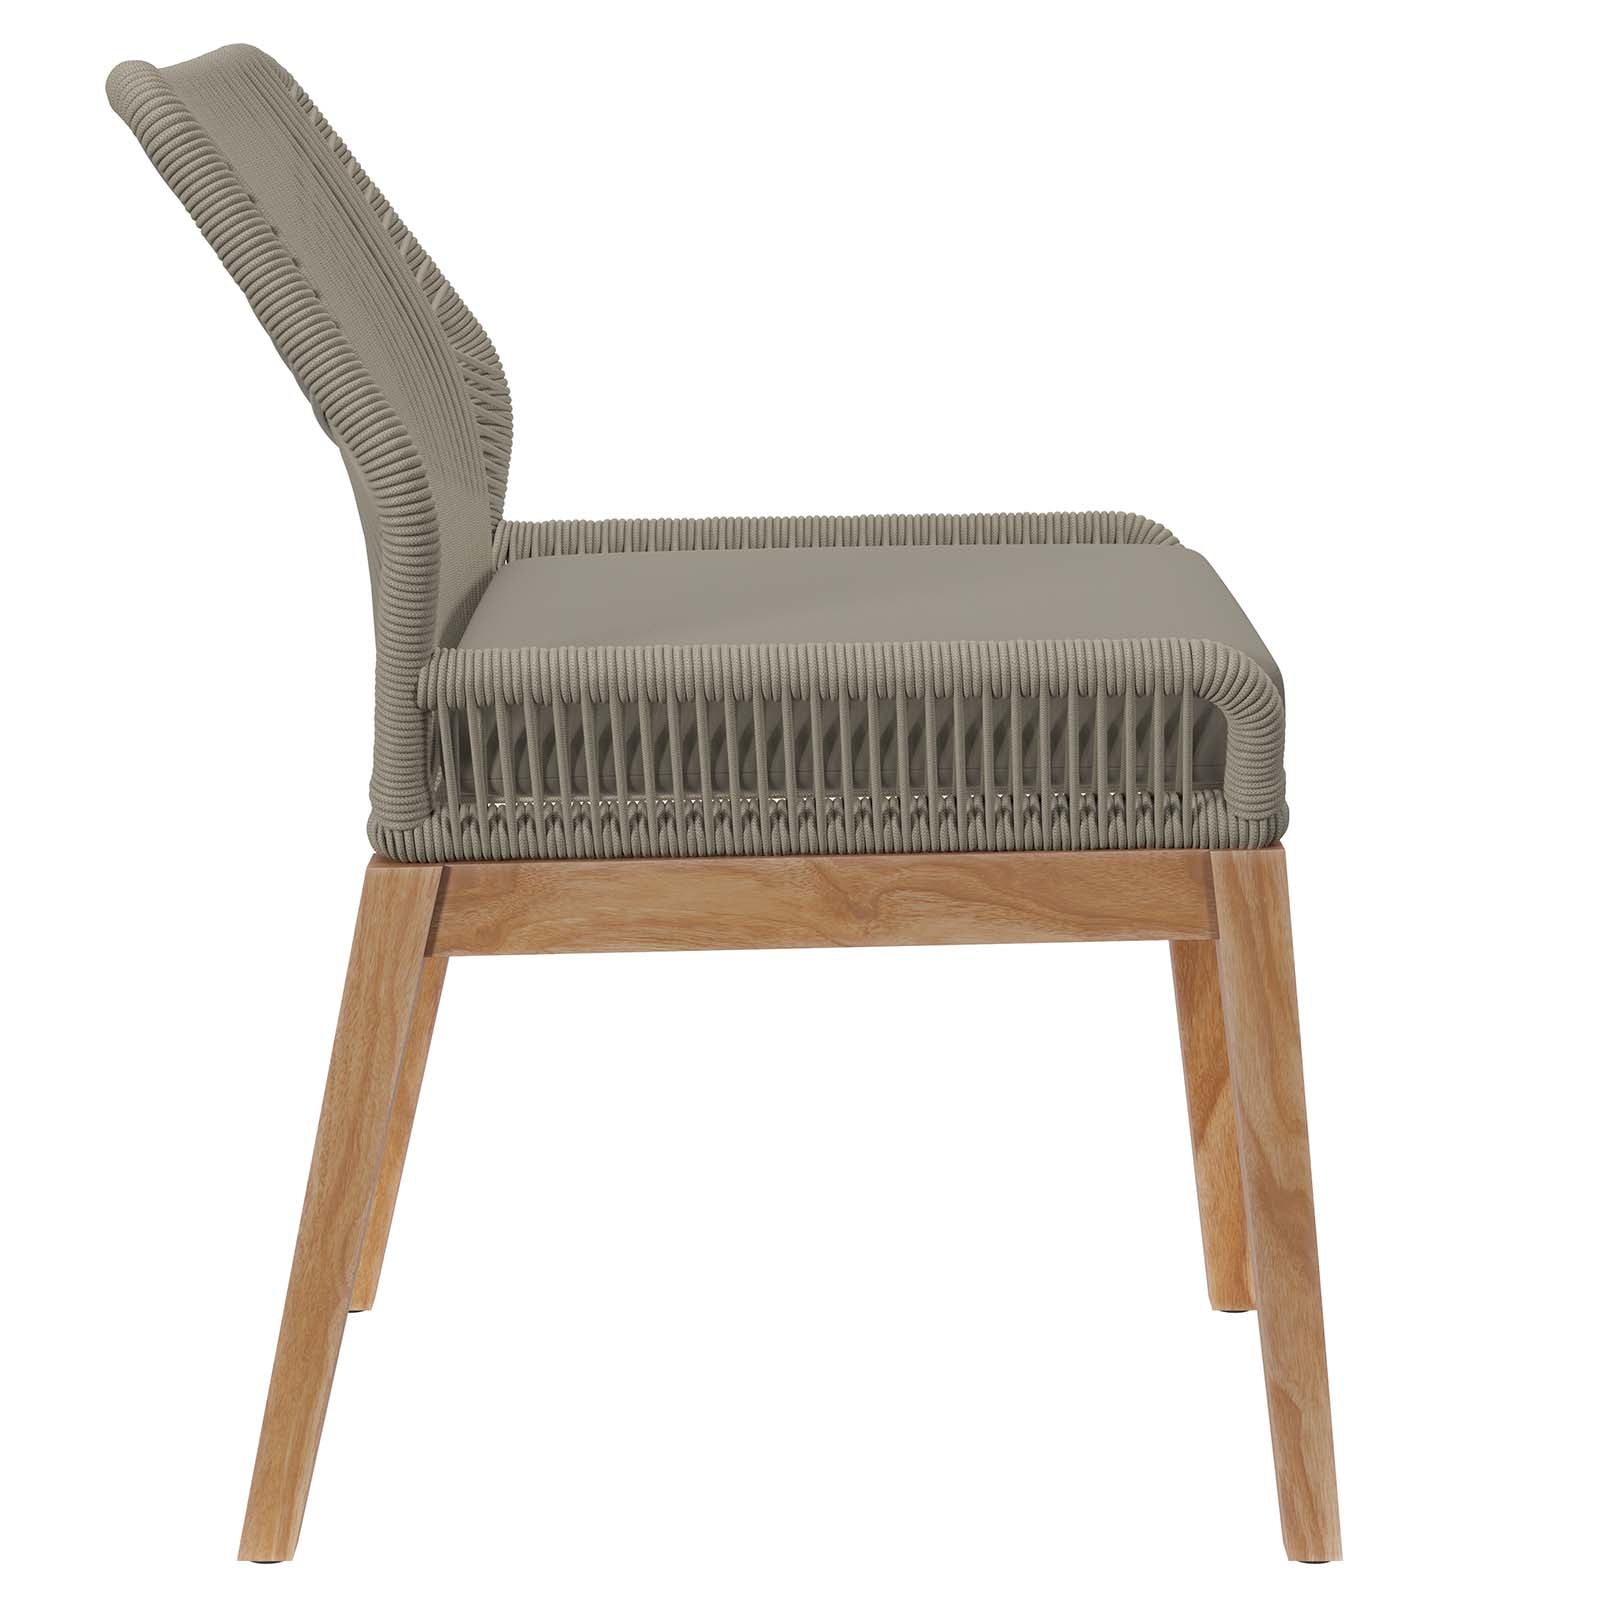 Wellspring Outdoor Patio Teak Wood Dining Chair - East Shore Modern Home Furnishings